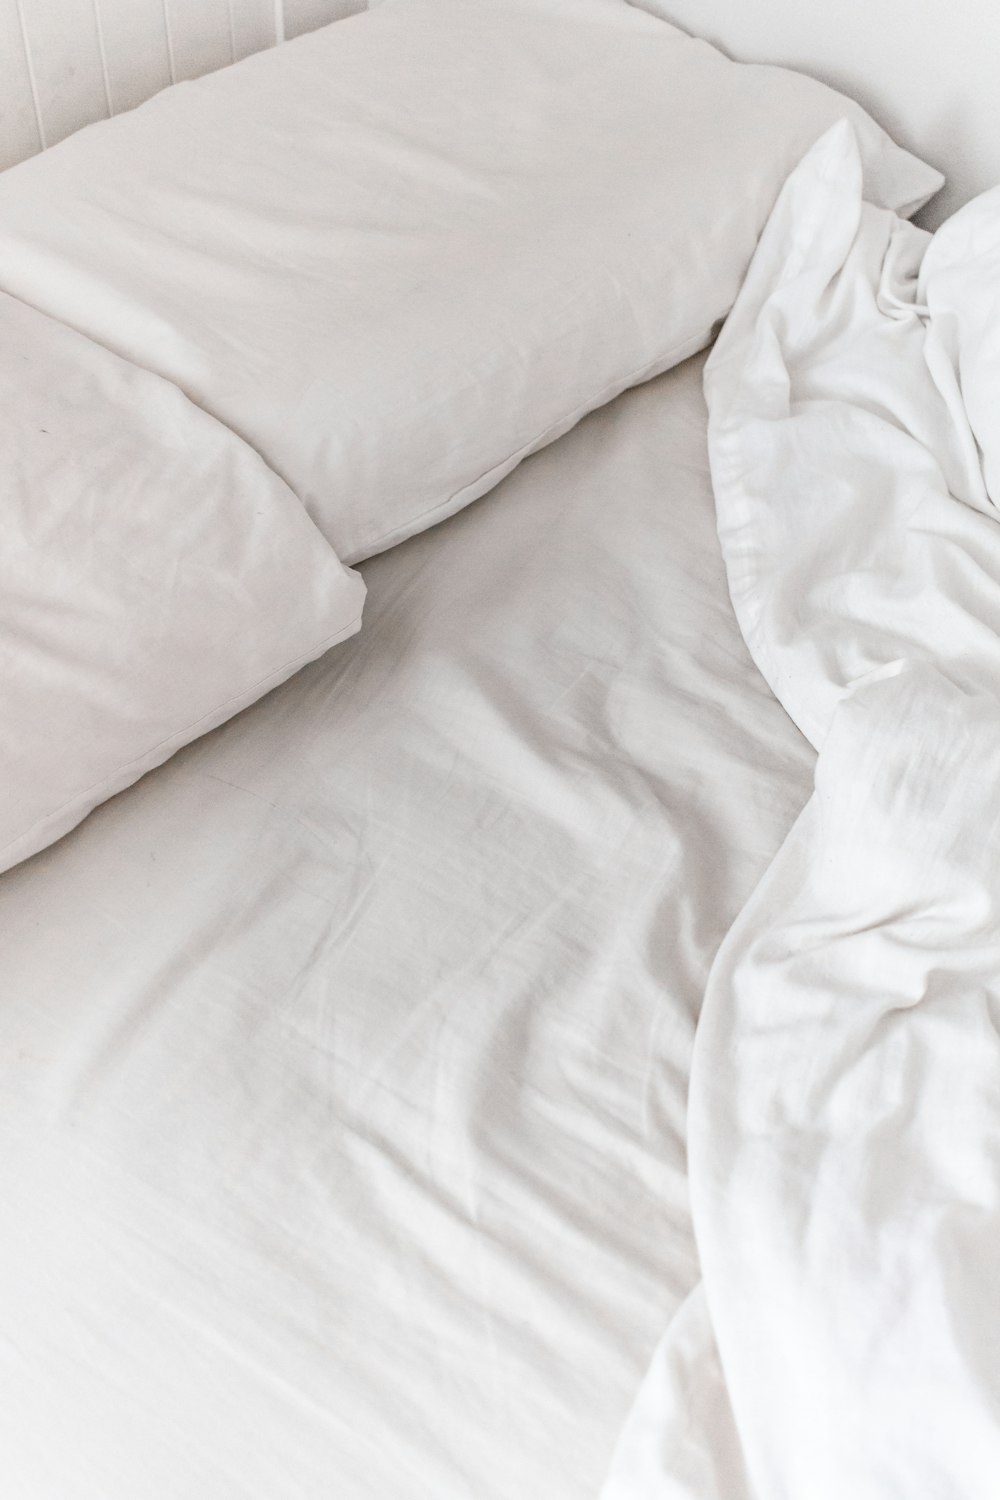 textil blanco sobre cama blanca